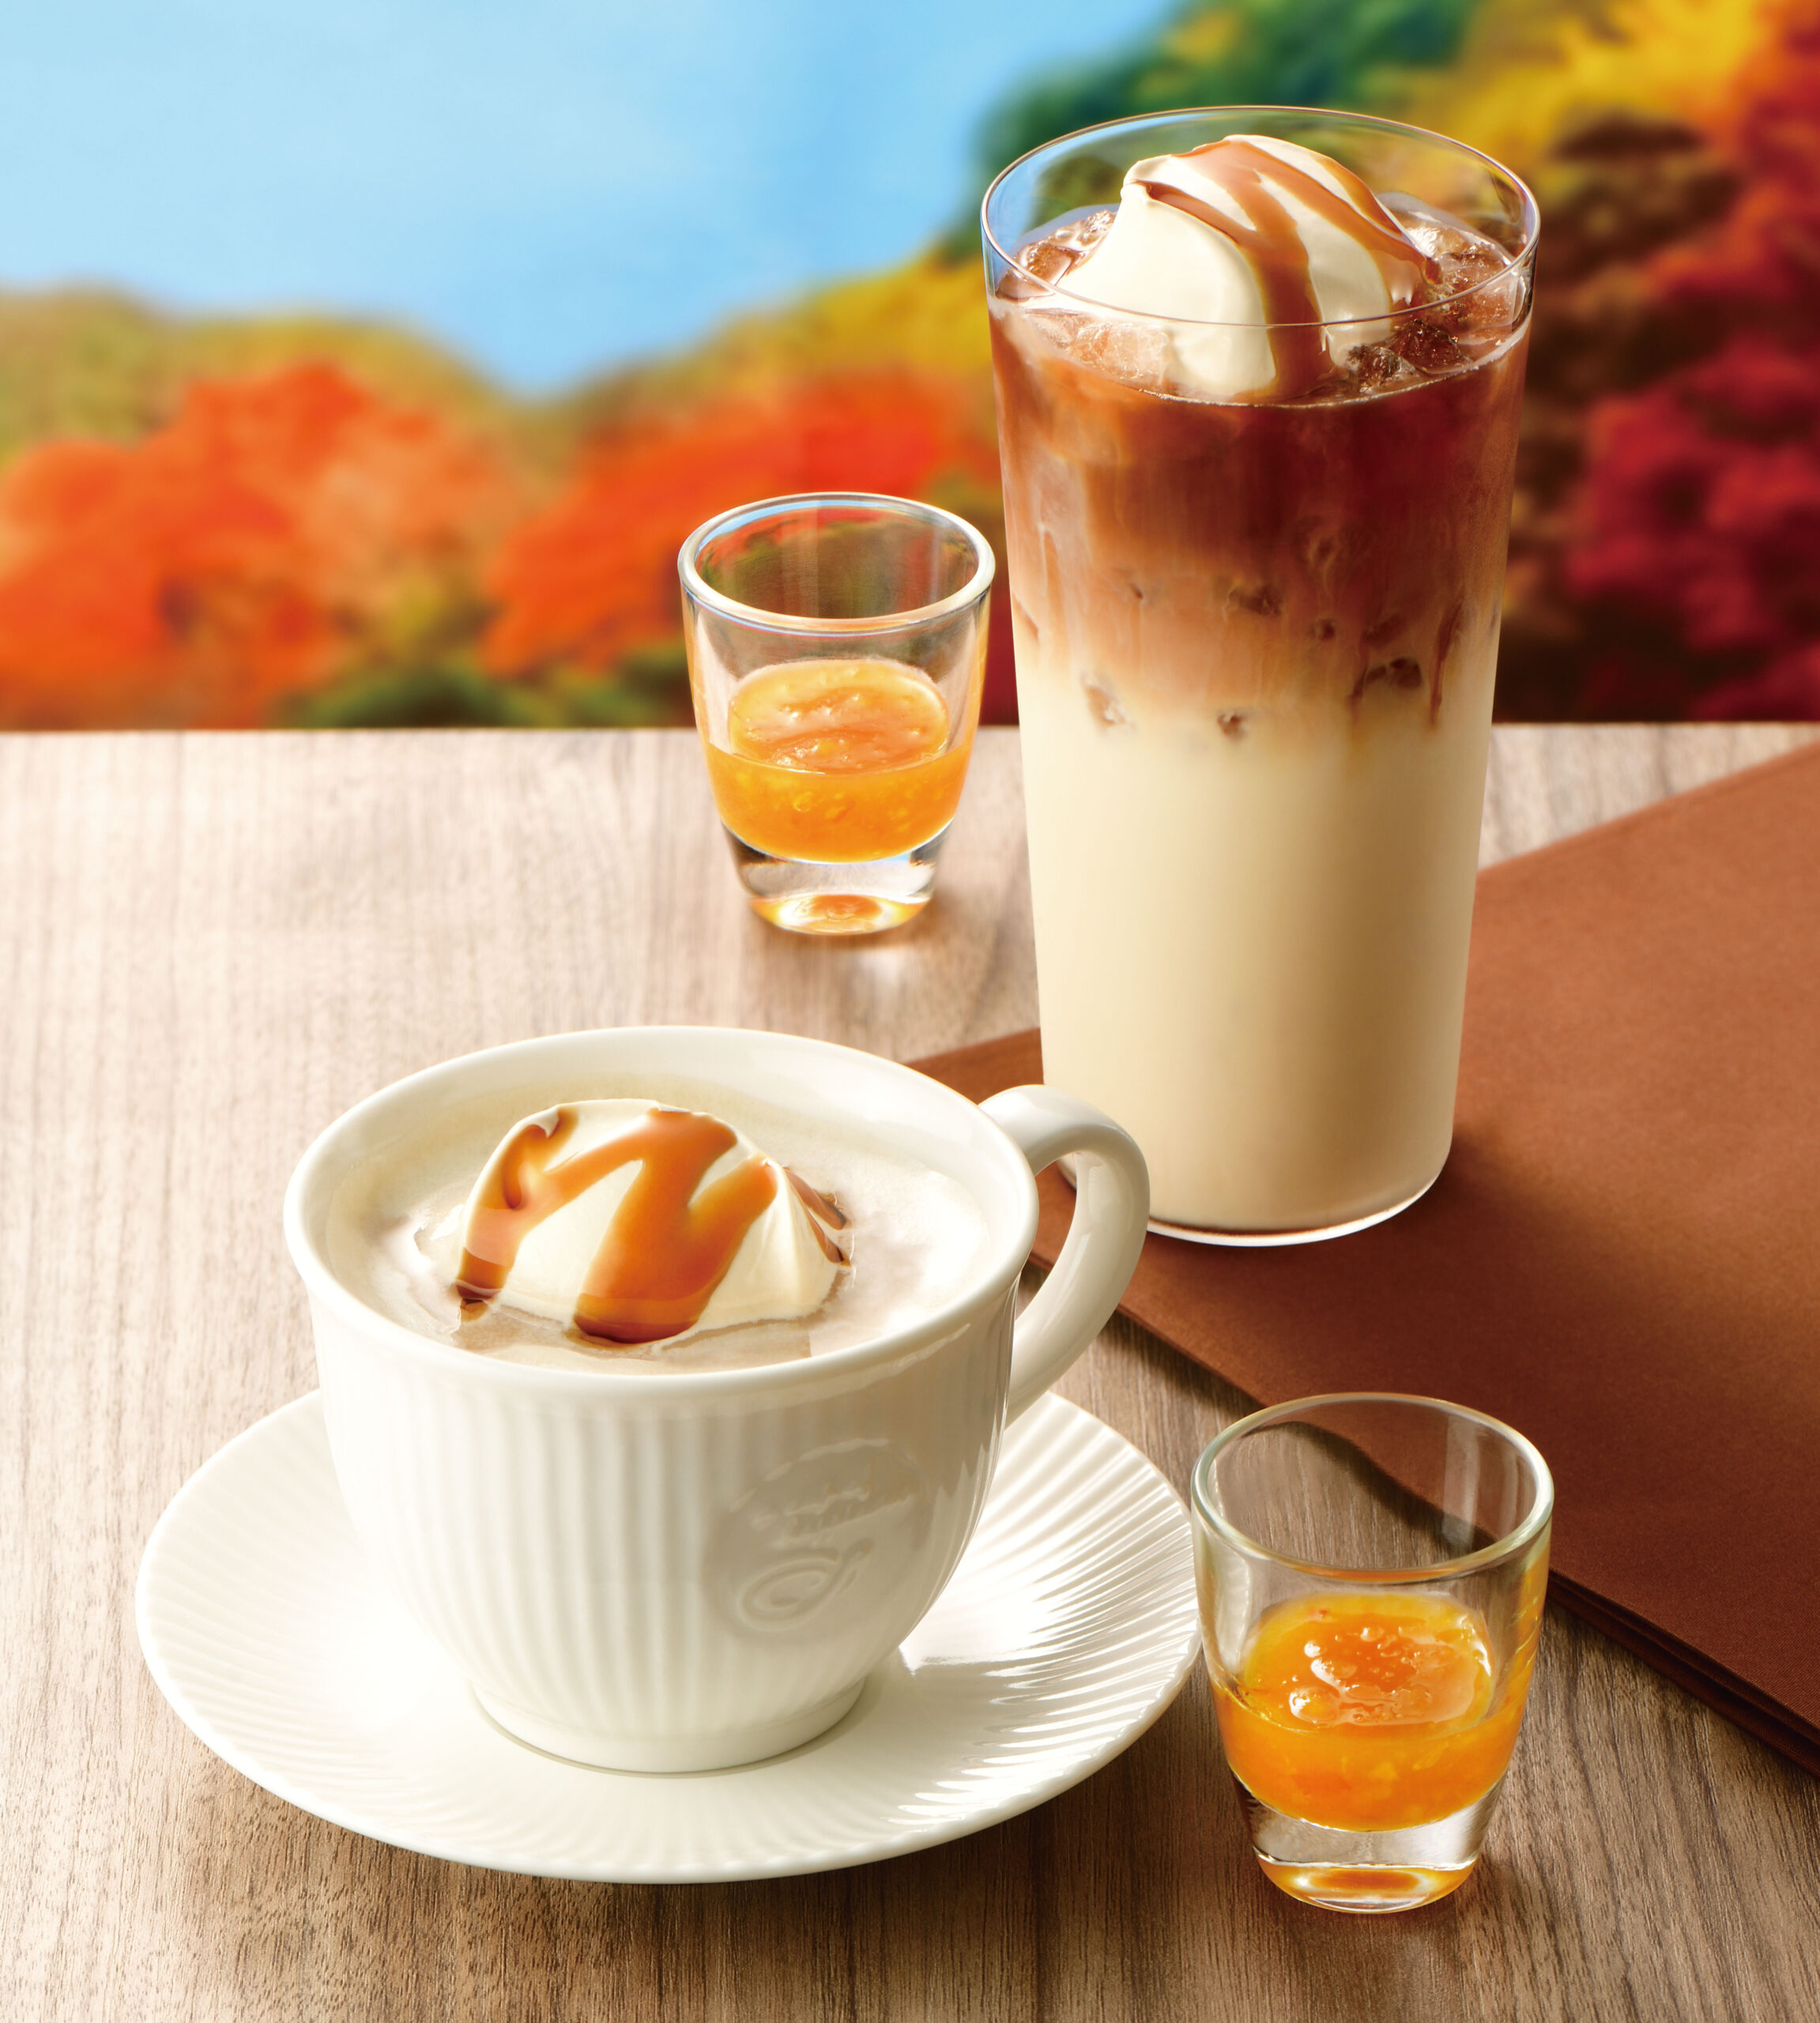 【CAFE de CRIE】風味豊かな沖縄県産の黒糖を使用した『黒糖ミルクコーヒー』など、九州・沖縄の食材を使用した新メニューを発売。